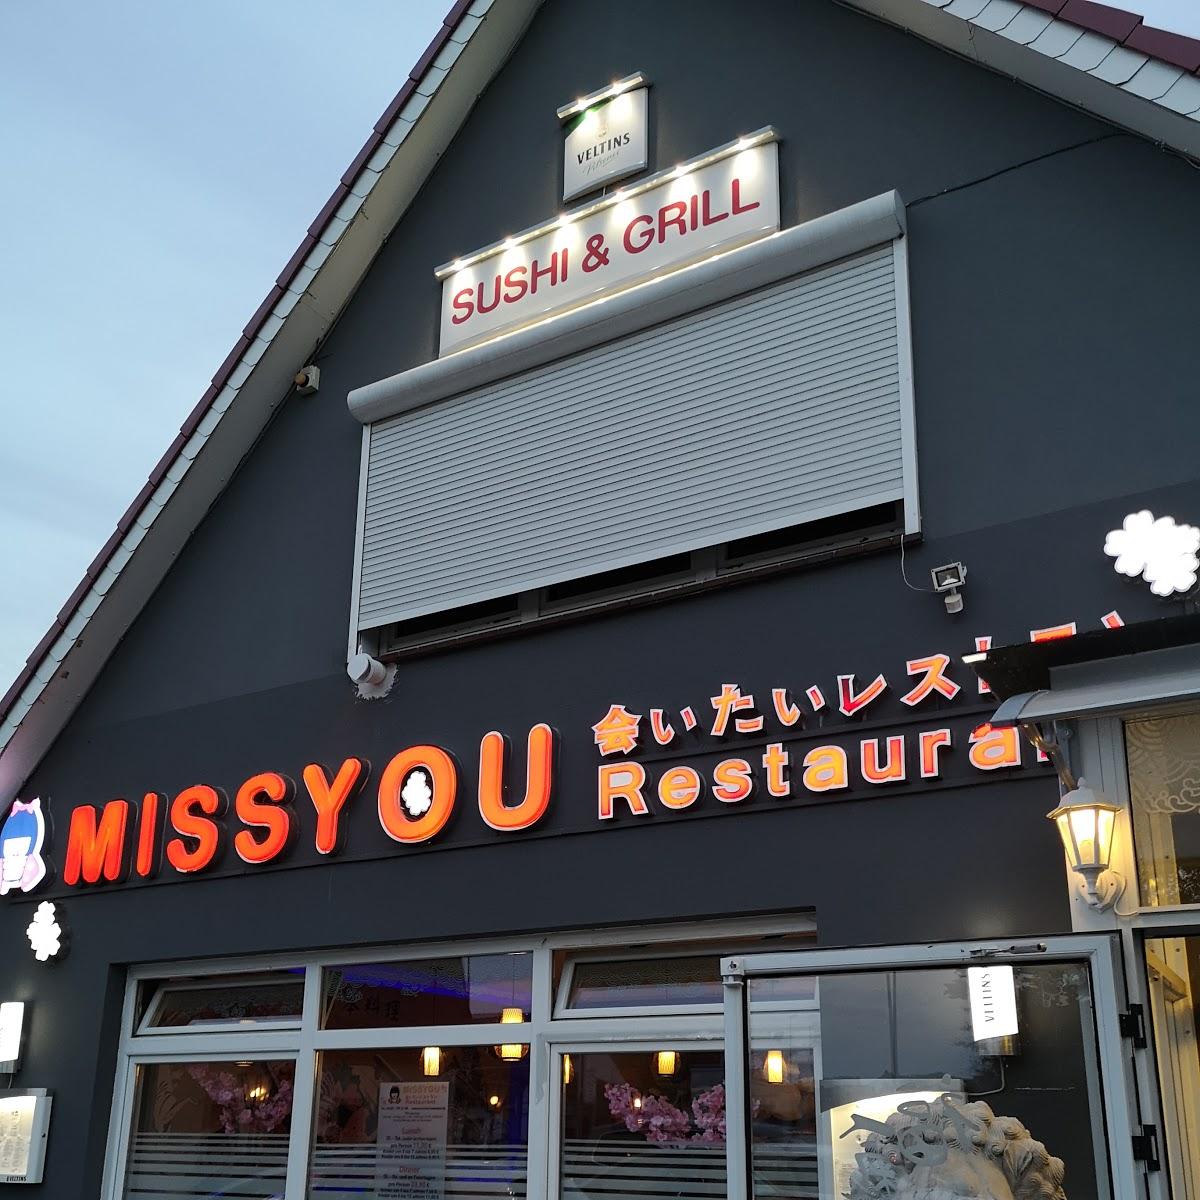 Restaurant "MISSYOU .Sushi,Grill" in Ganderkesee